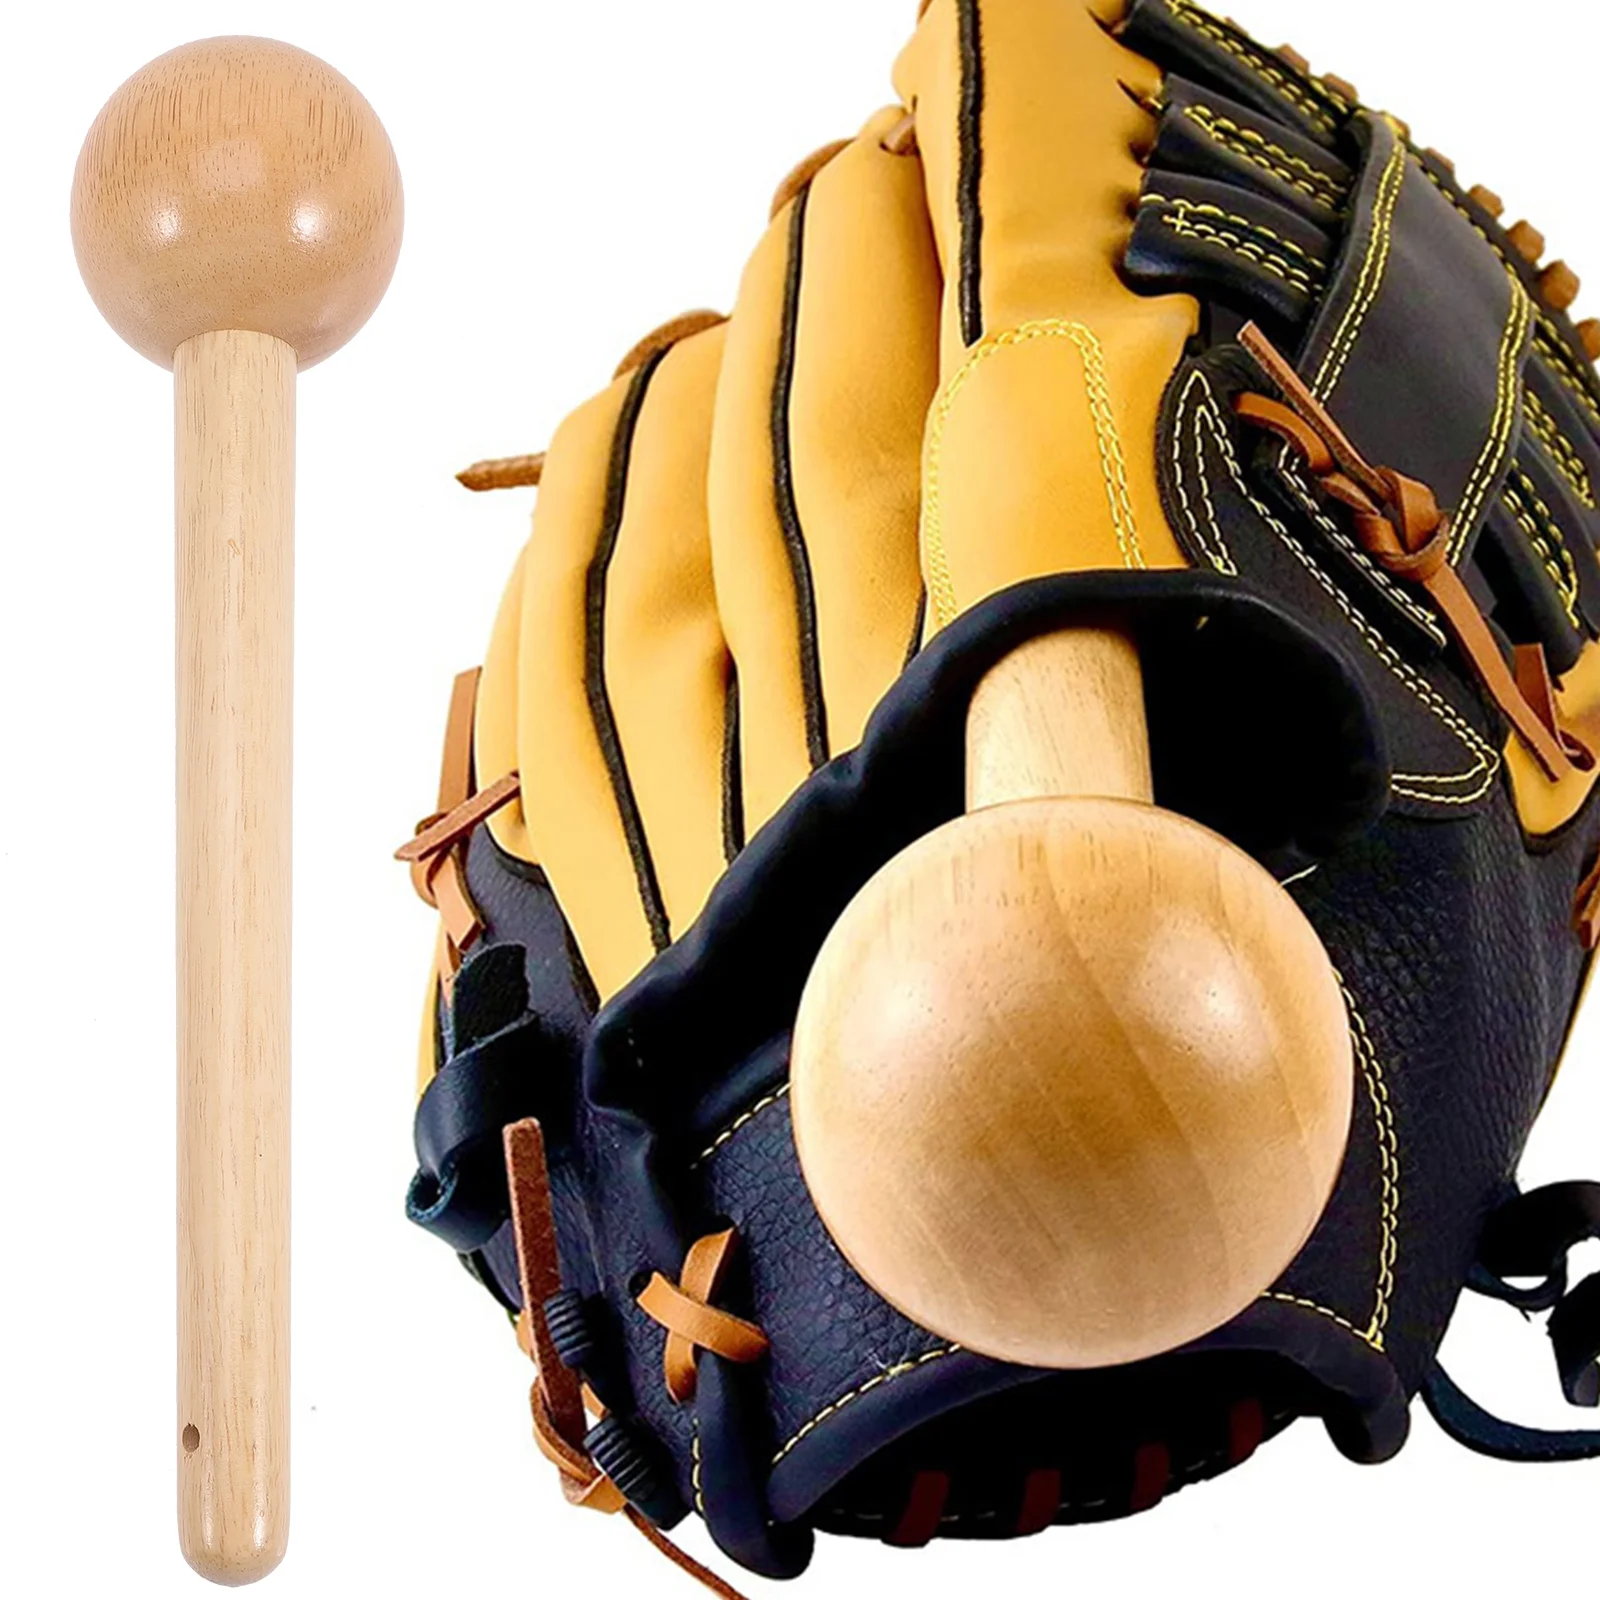 

Ball Shaped Pocket Softball Wooden Mallets Mini Wooden Hammer Baseball Accessory Accessories